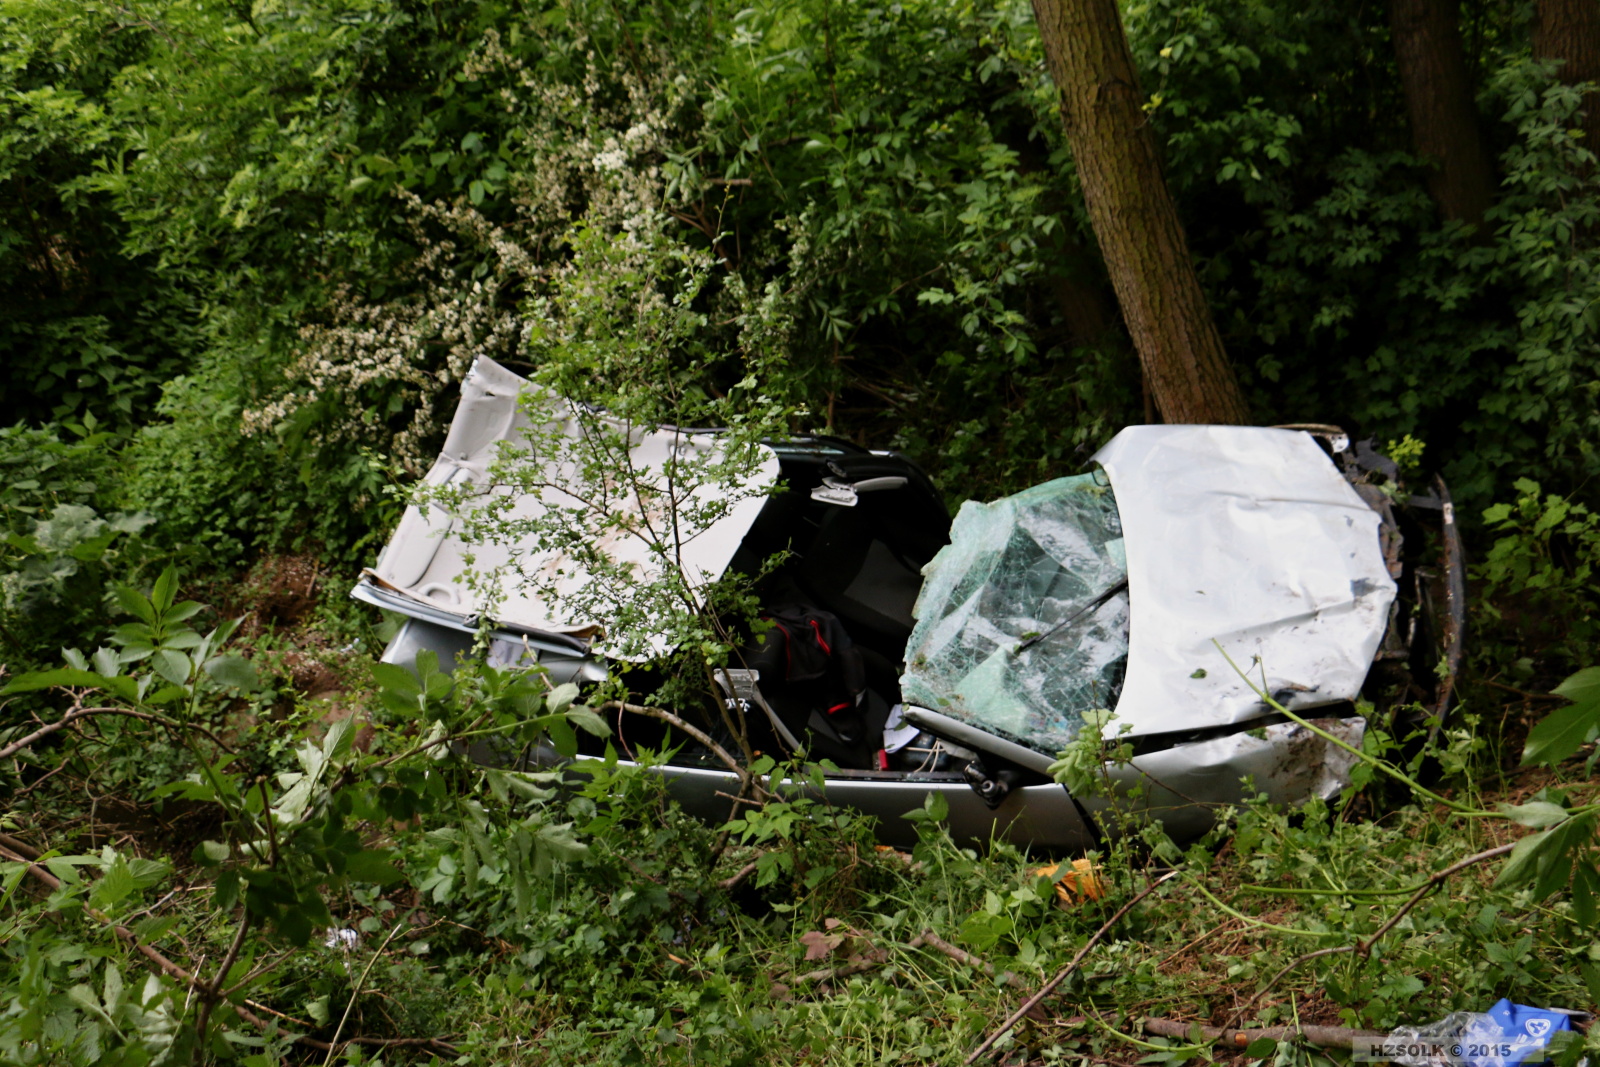 2 21-5-2015 DN nehoda dvou osobních vozidel (2).JPG